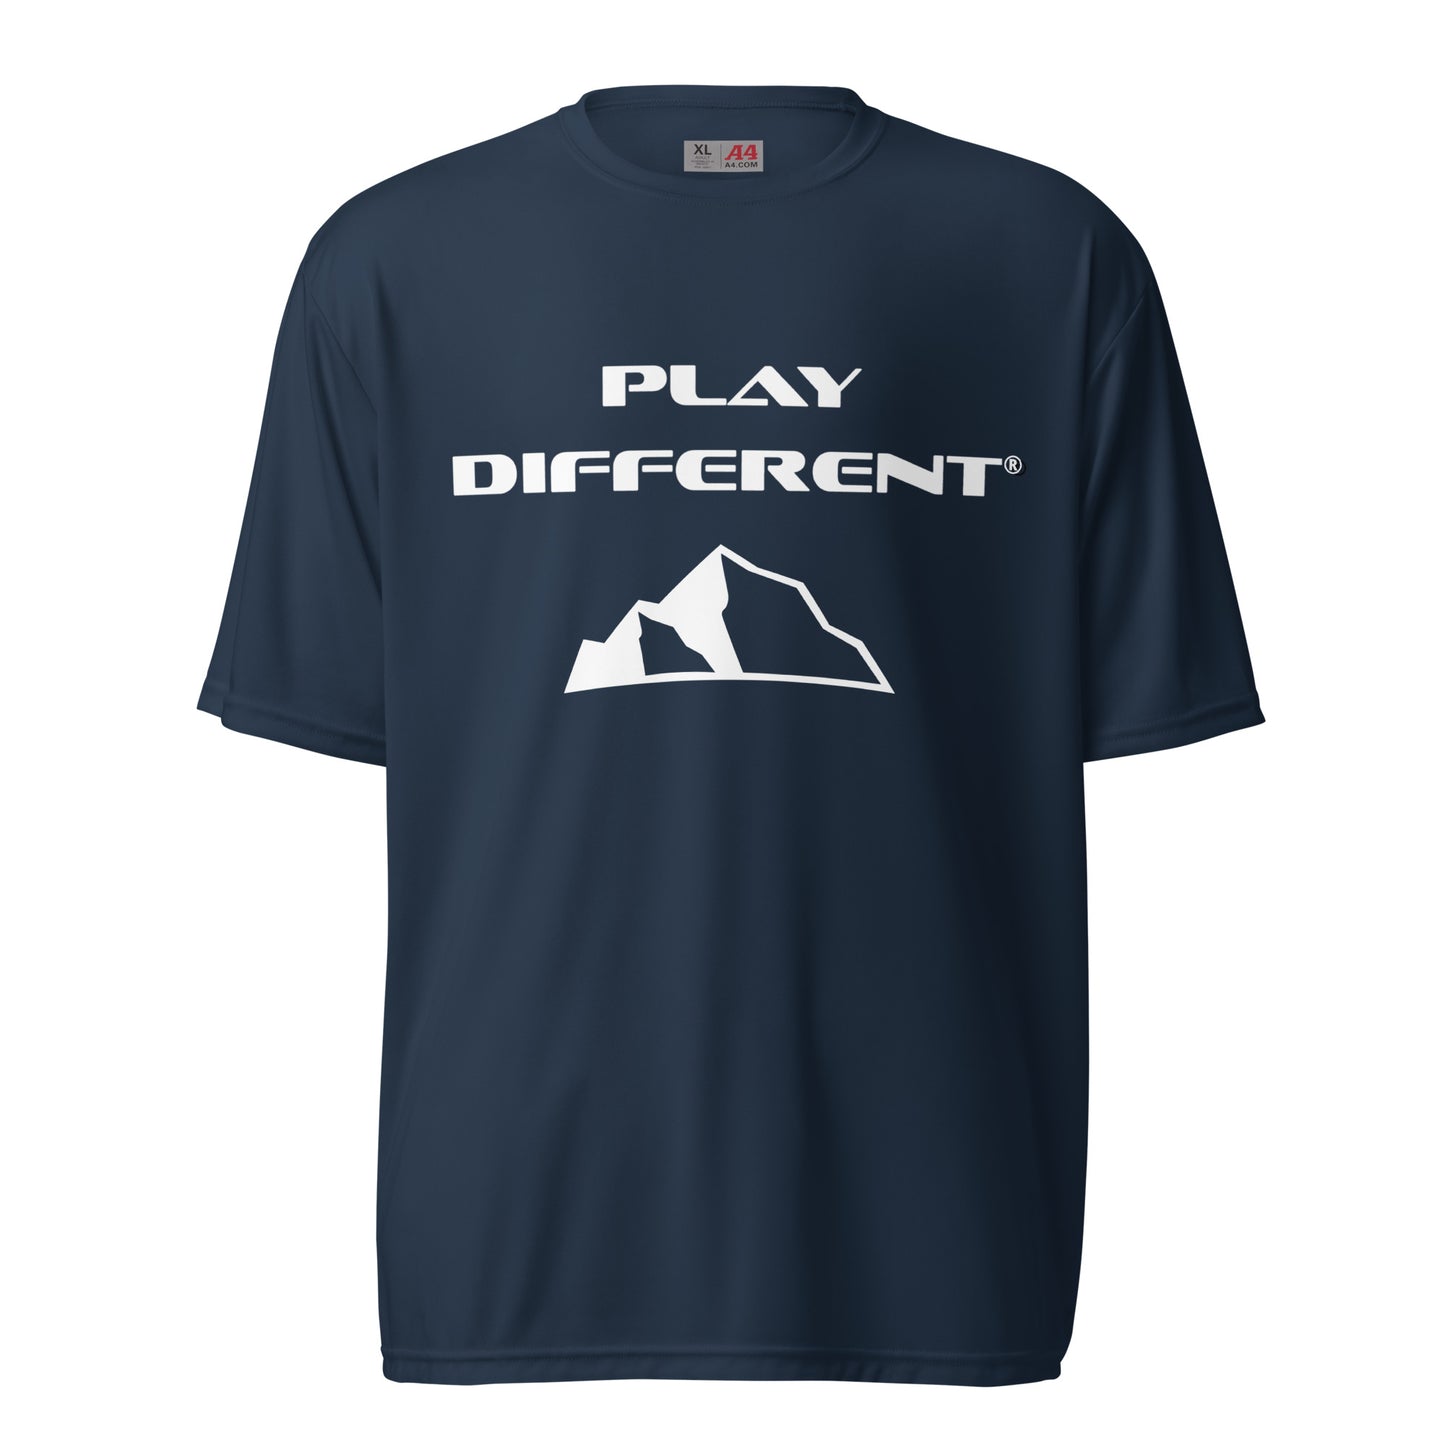 Play Different® Unisex performance crew neck t-shirt navy